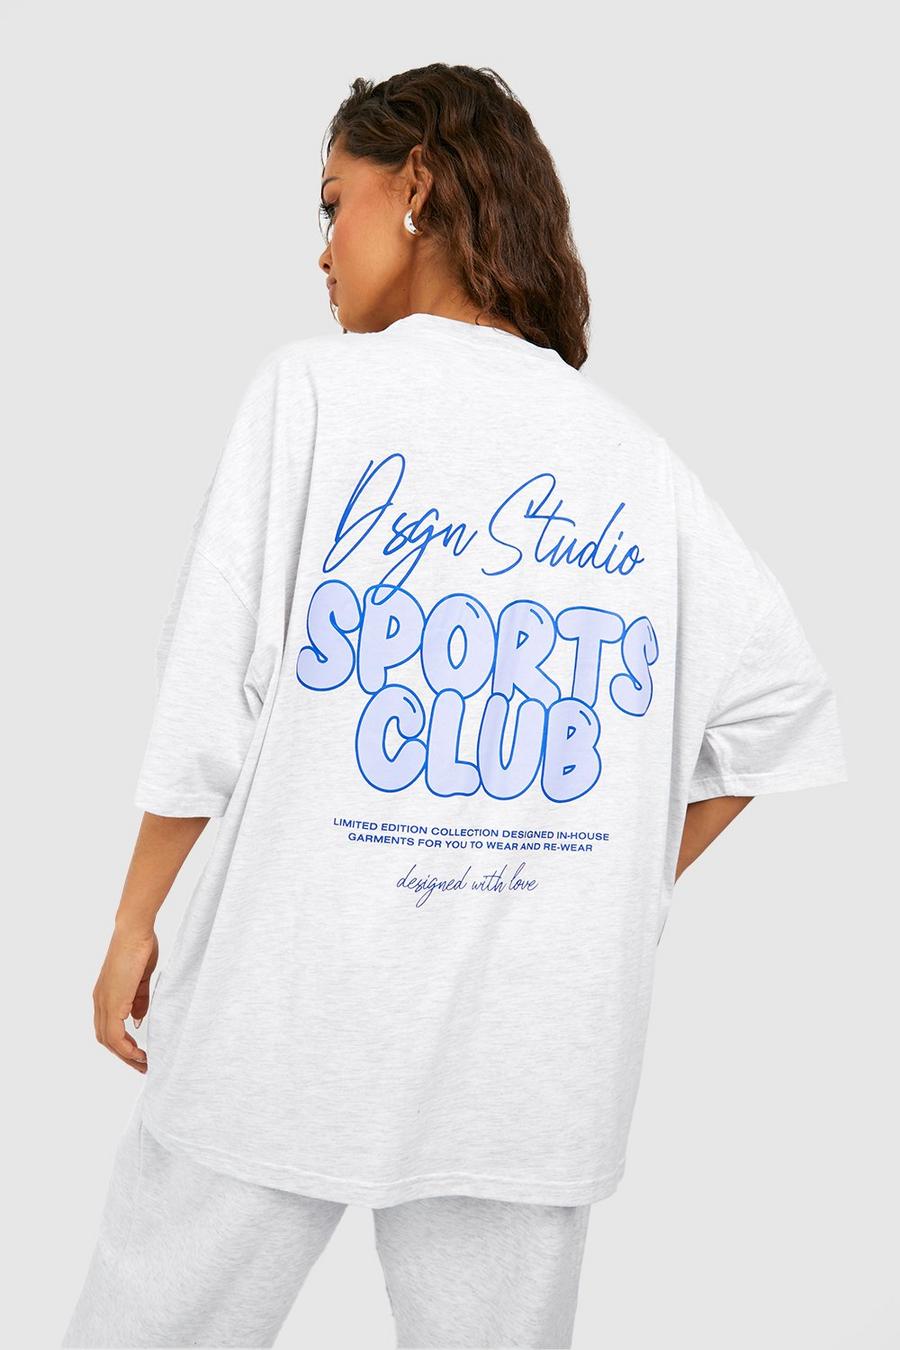 T-shirt oversize con slogan Dsgn Studio Sports a bolle d’aria, Ash grey